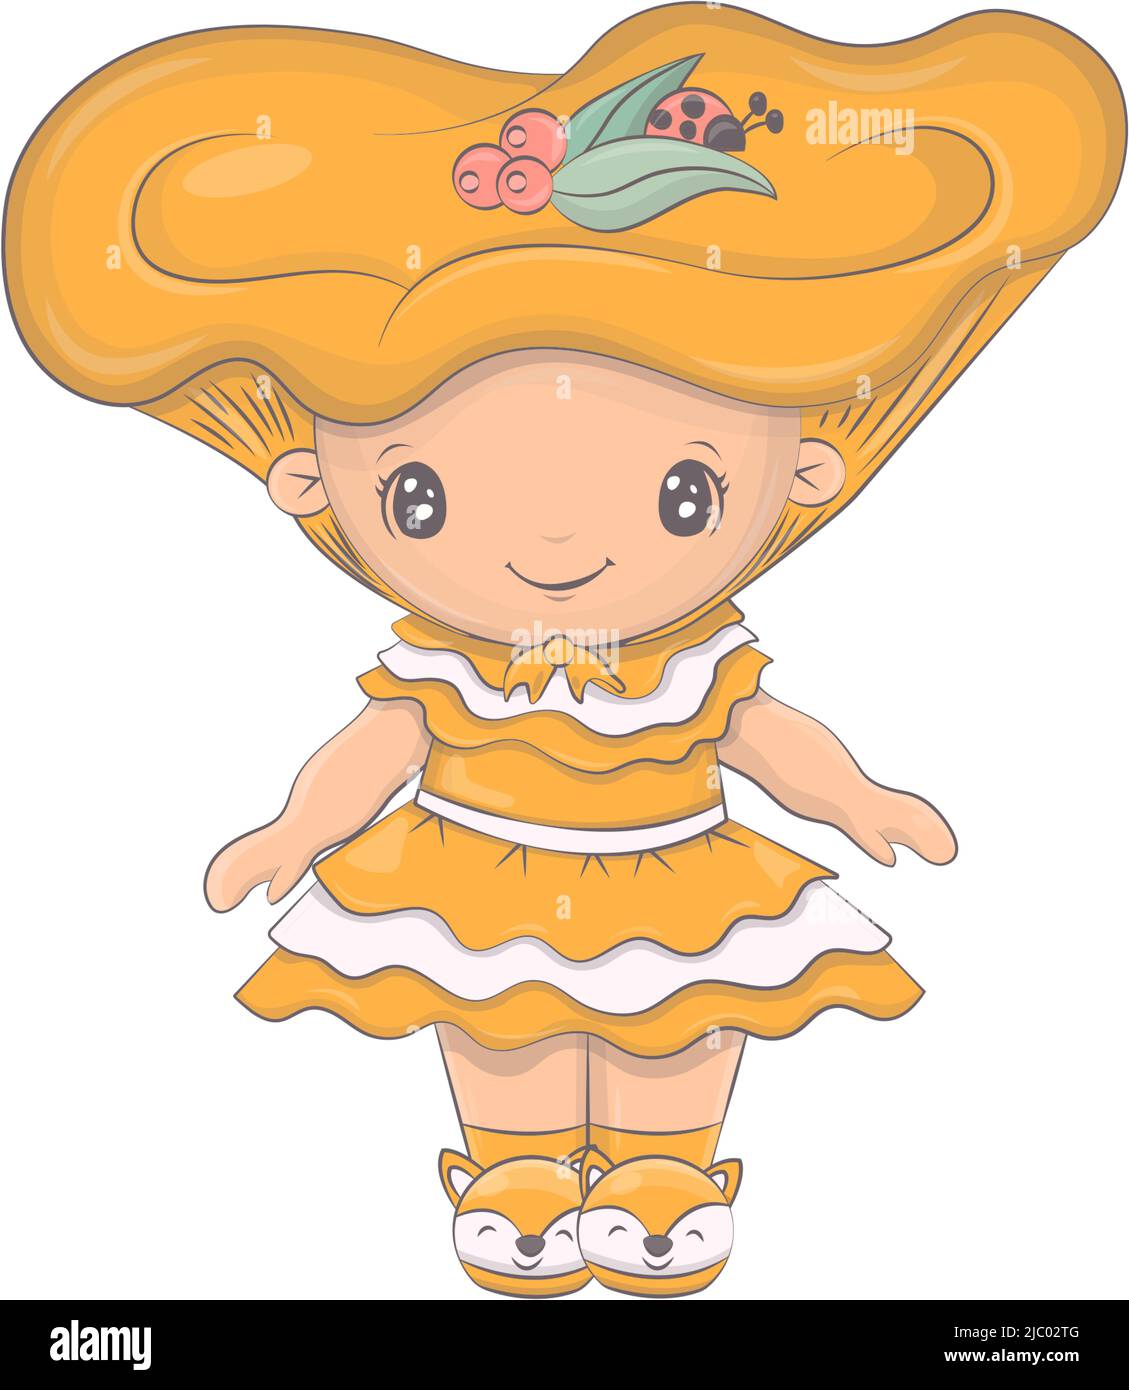 Cute cartoon illustration of mushroom character. Vector illustration of a cute character. Cute little illustration for kids, fairy tales, covers, baby Stock Vector